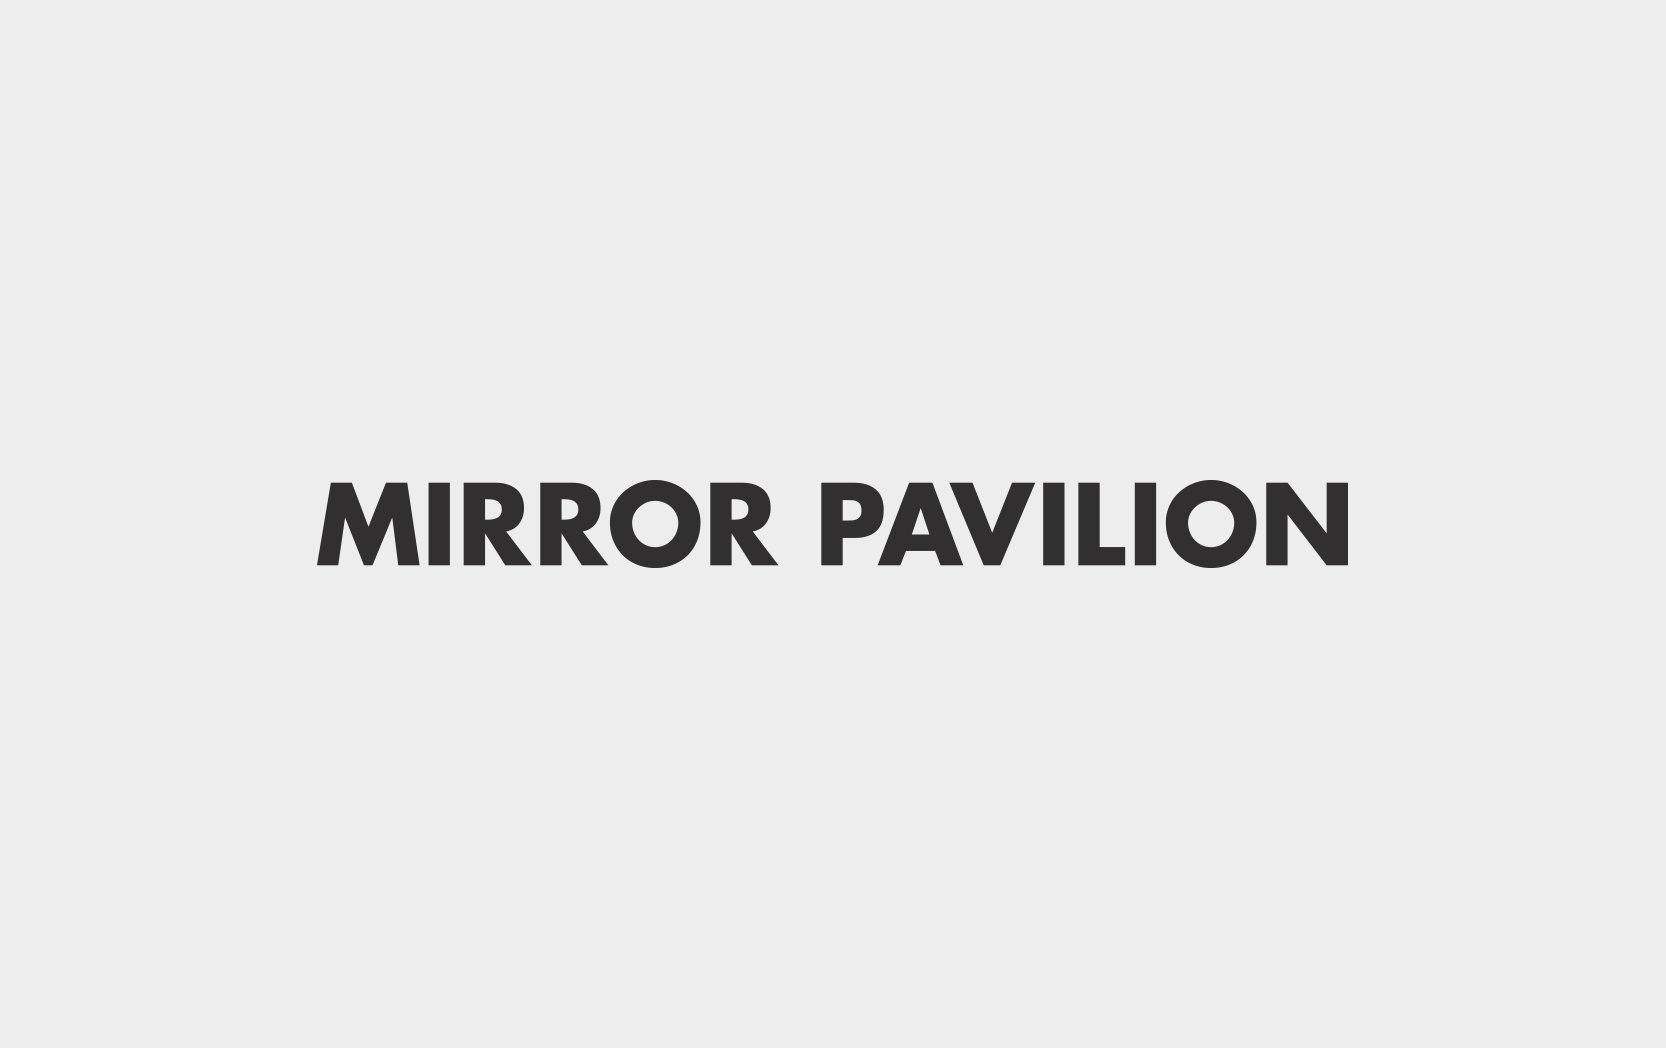 Mirror Pavilion